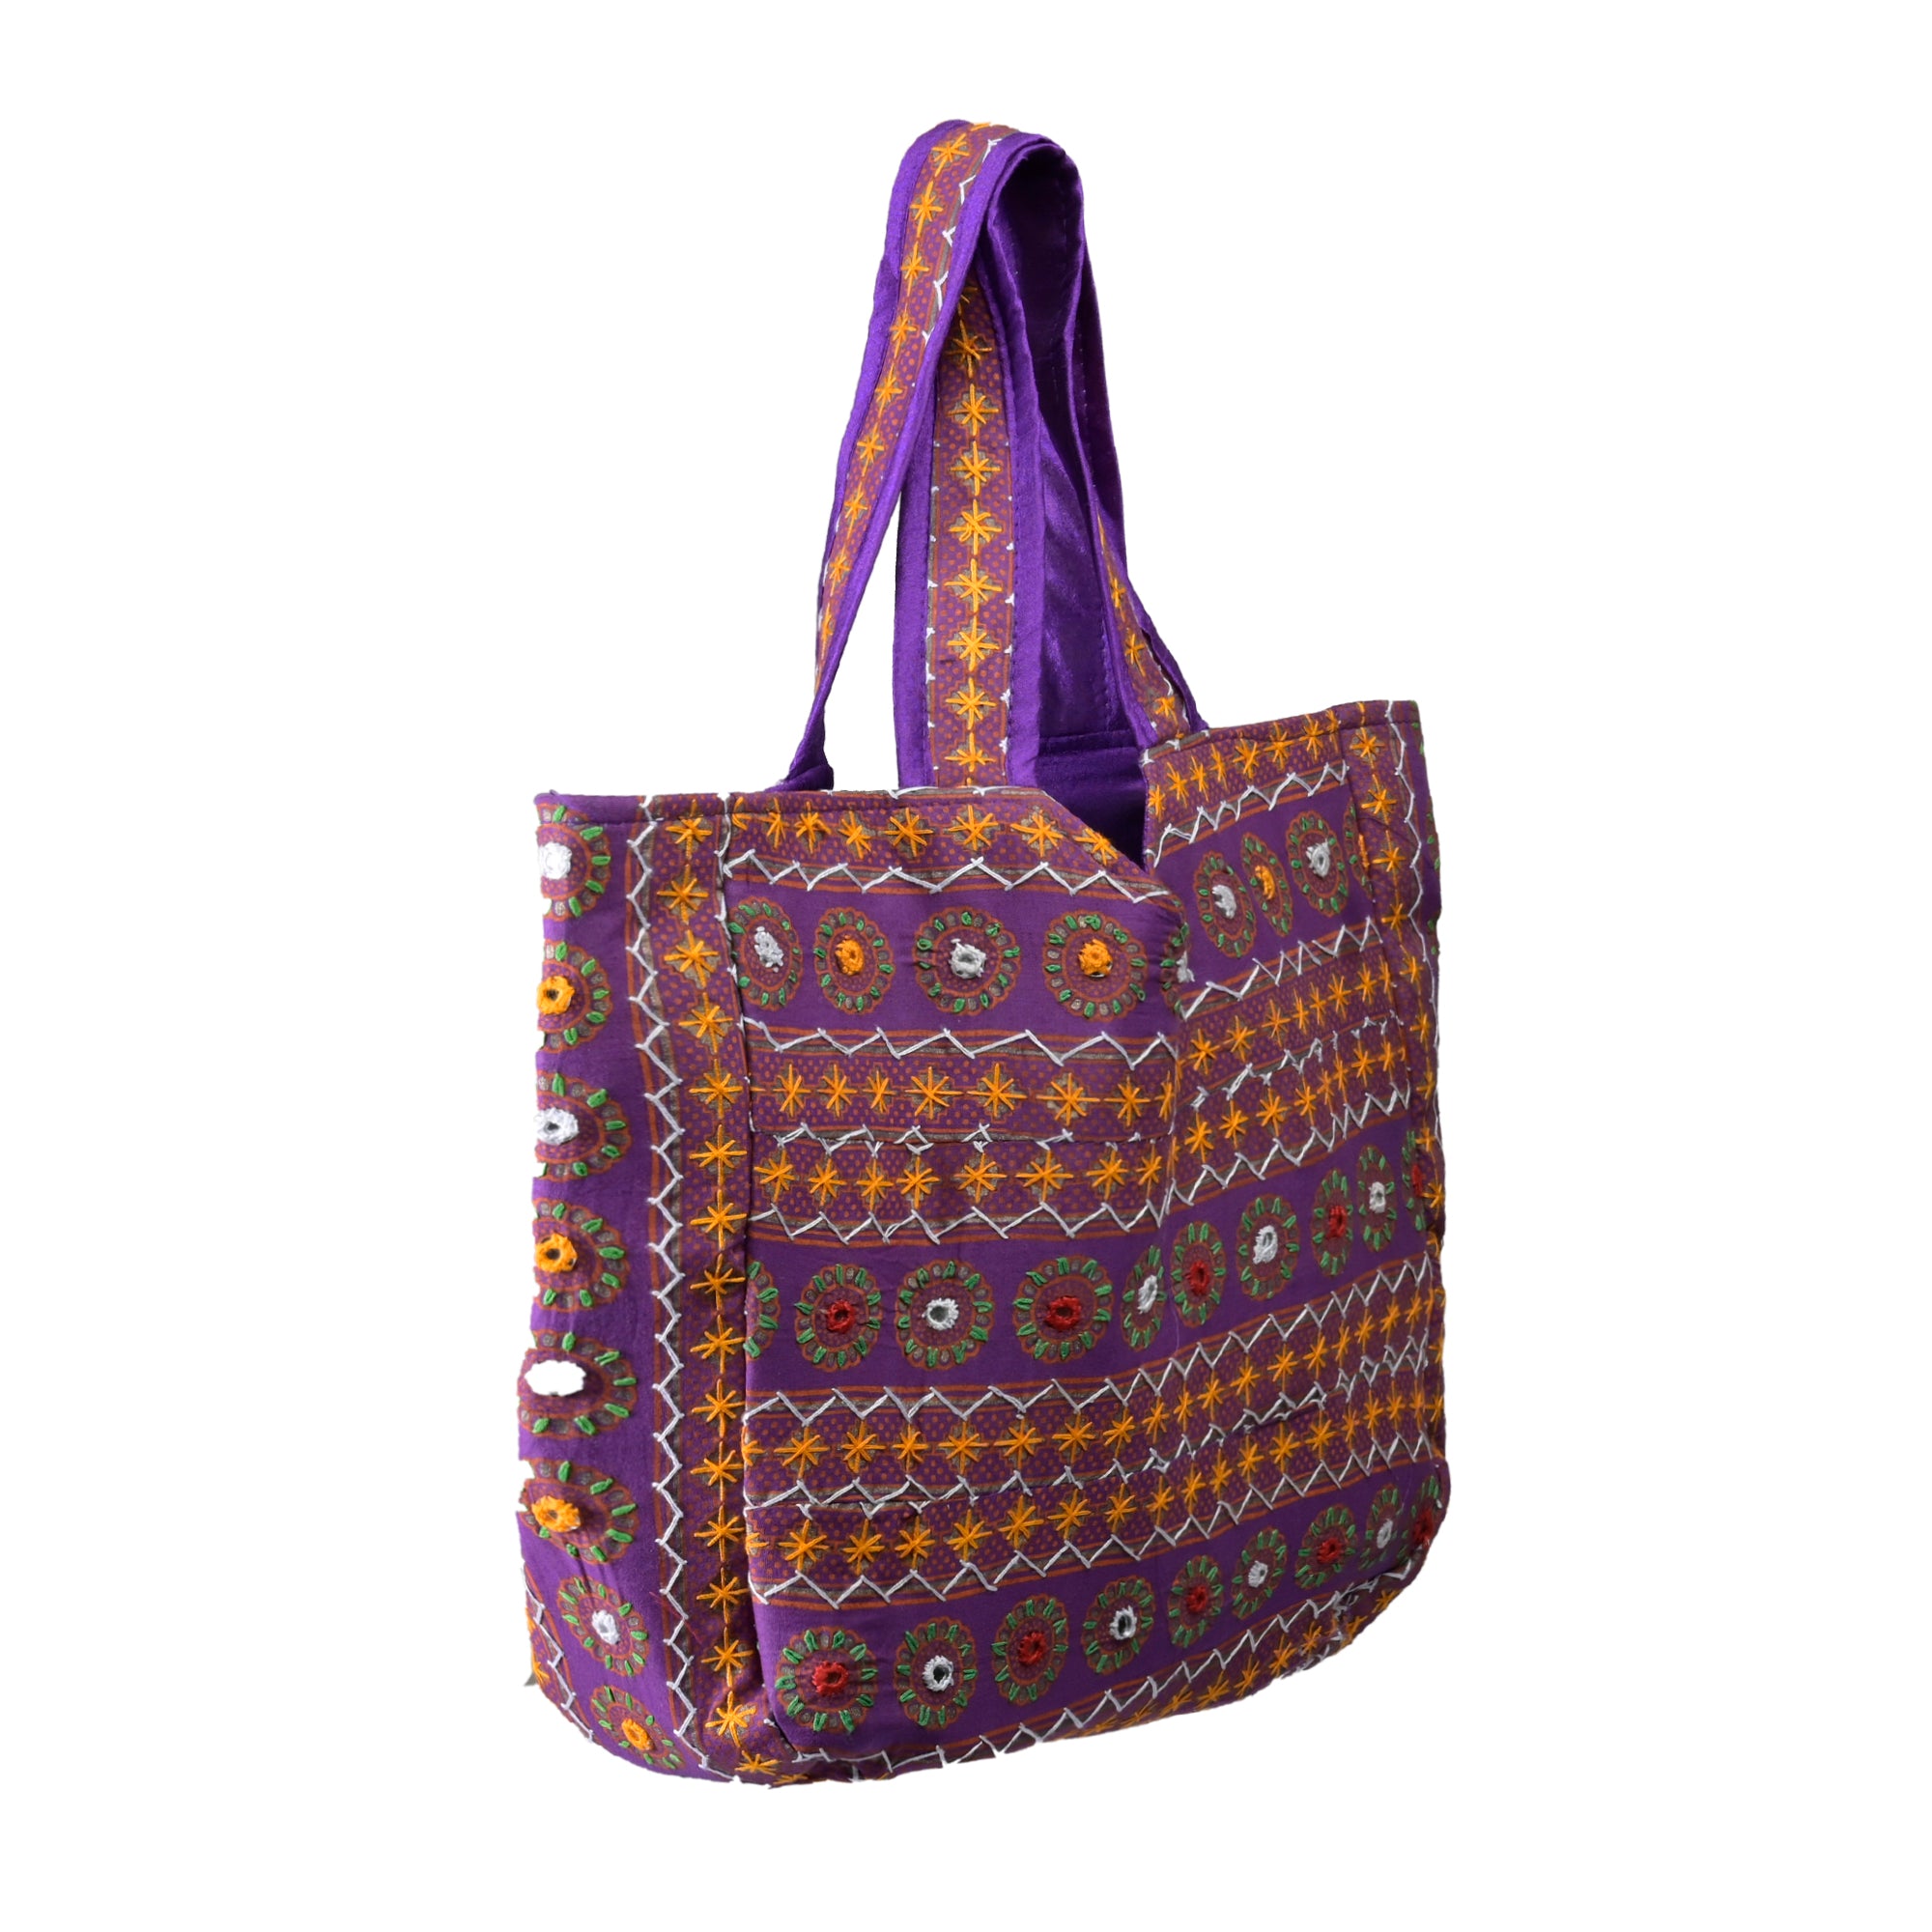 Handbag with ethnic design (with mirror work) | Diy bag designs, Mirror work,  Kutch work designs